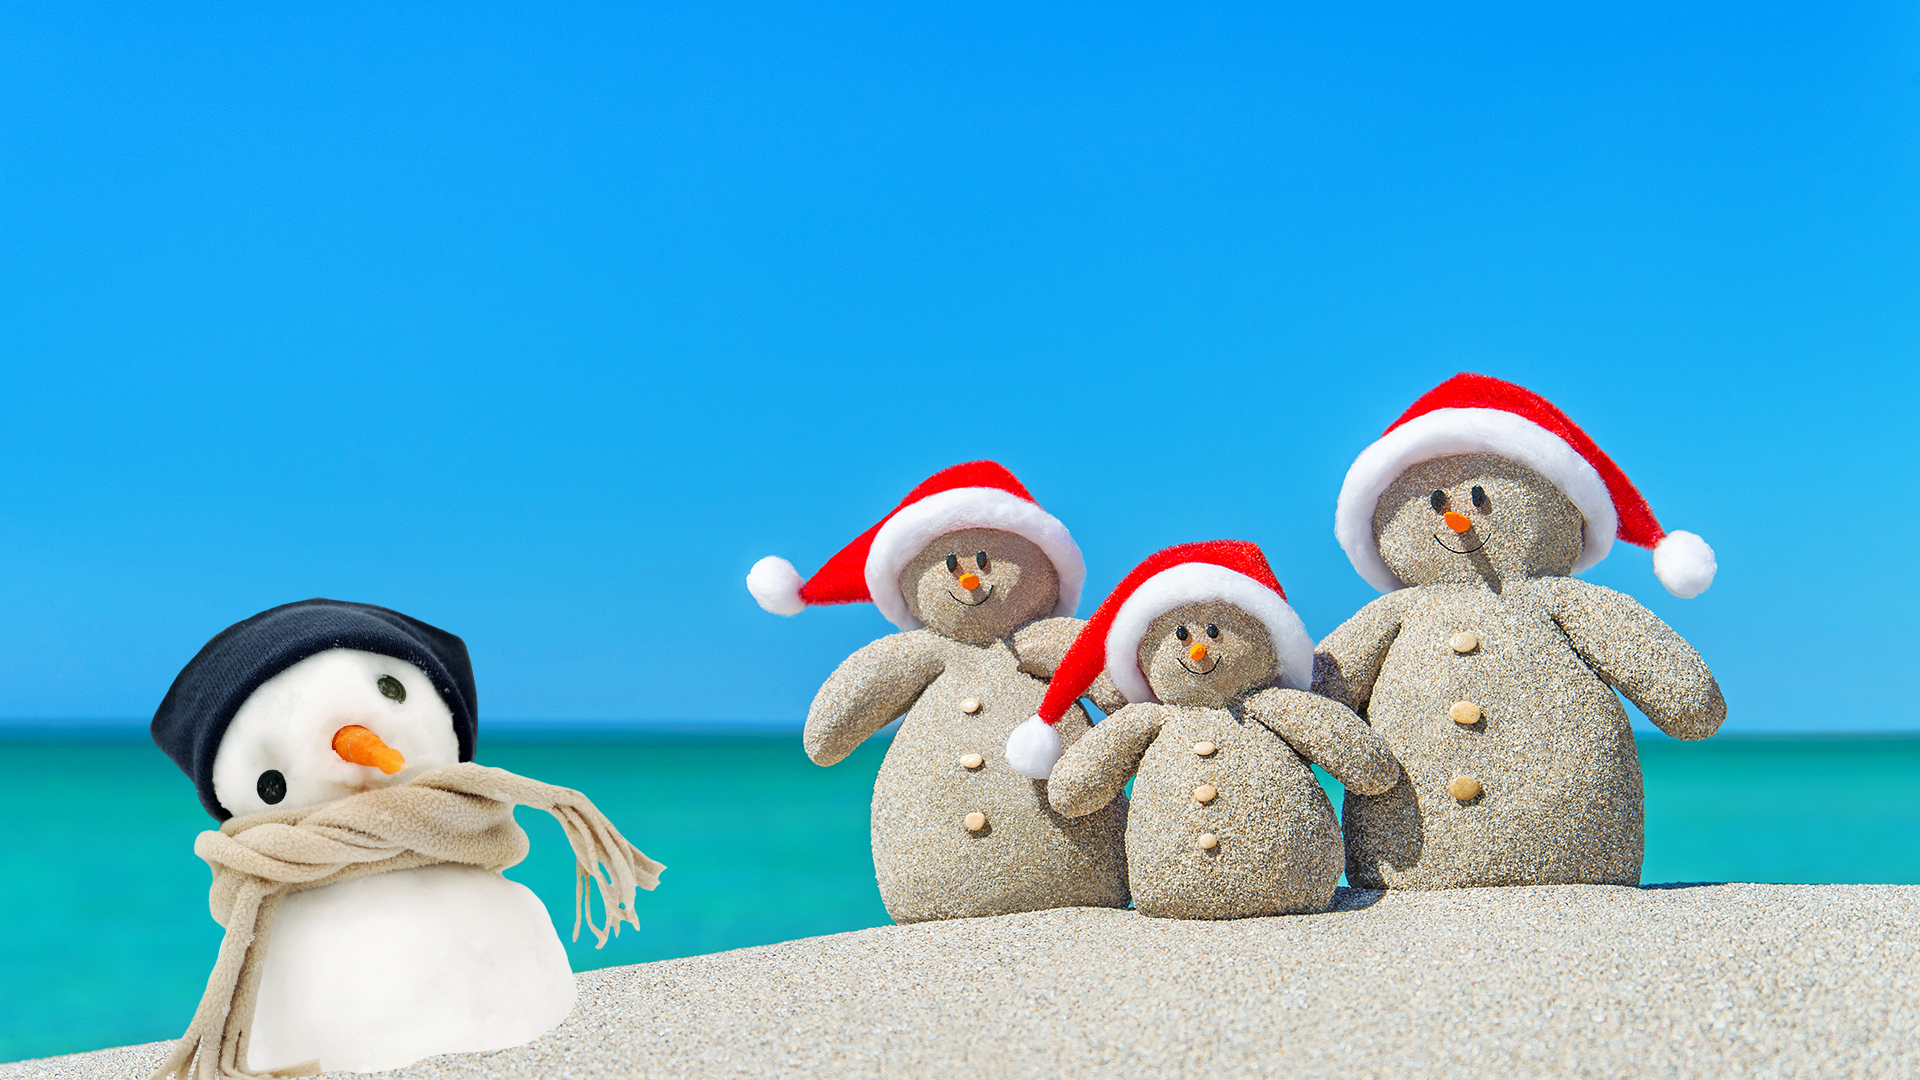 Snowman and sand sculptures on a beach